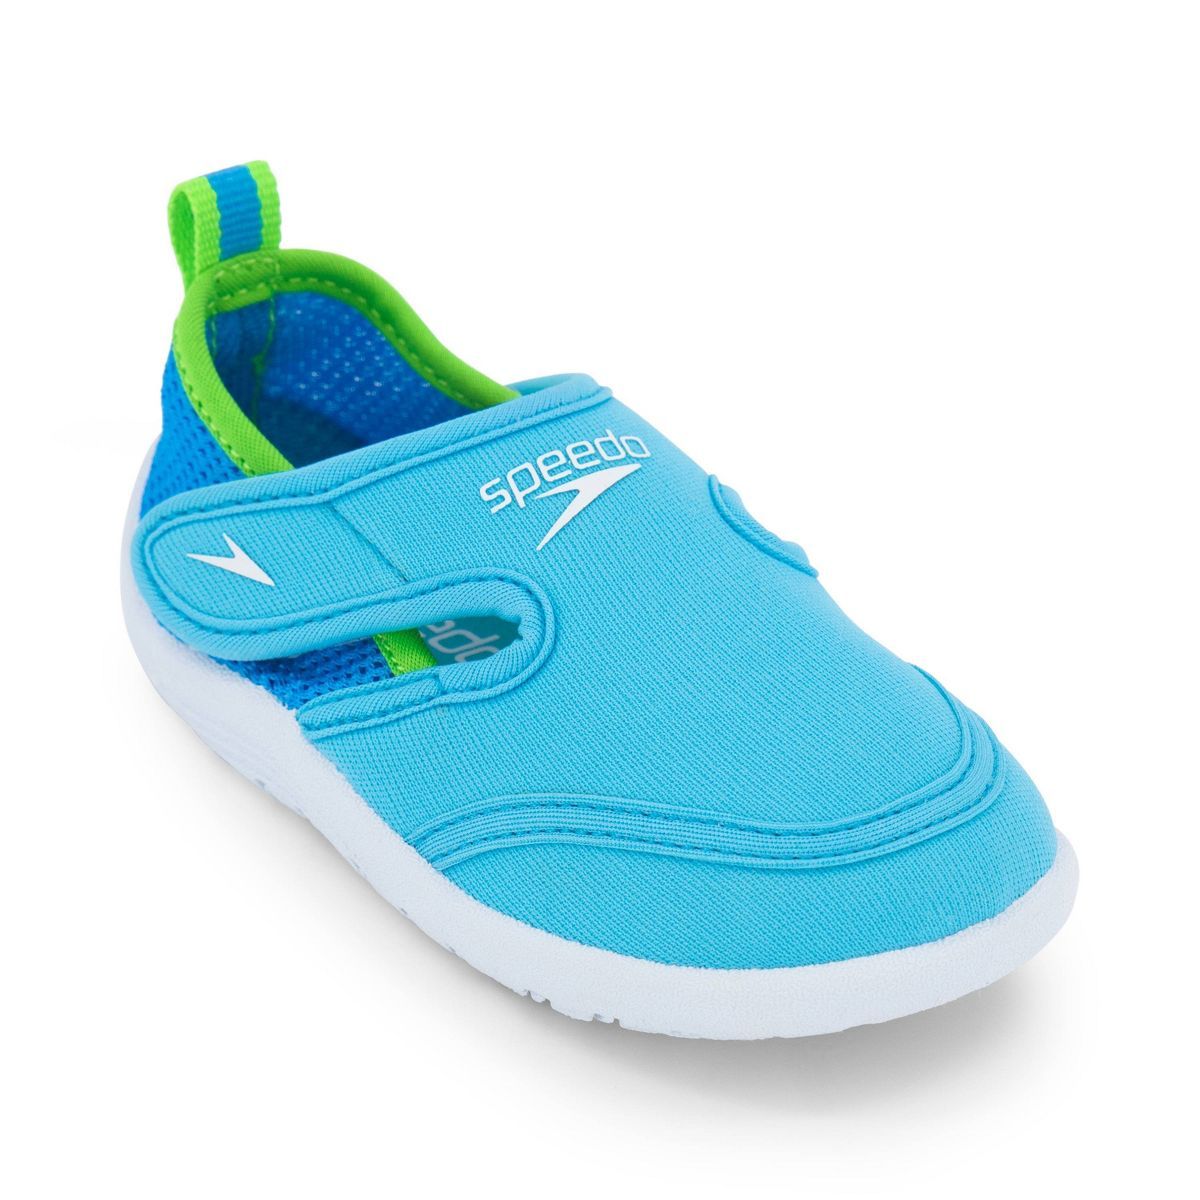 Speedo Toddler Hybrid Water Shoes - Blue/Turquoise 7-8 | Target